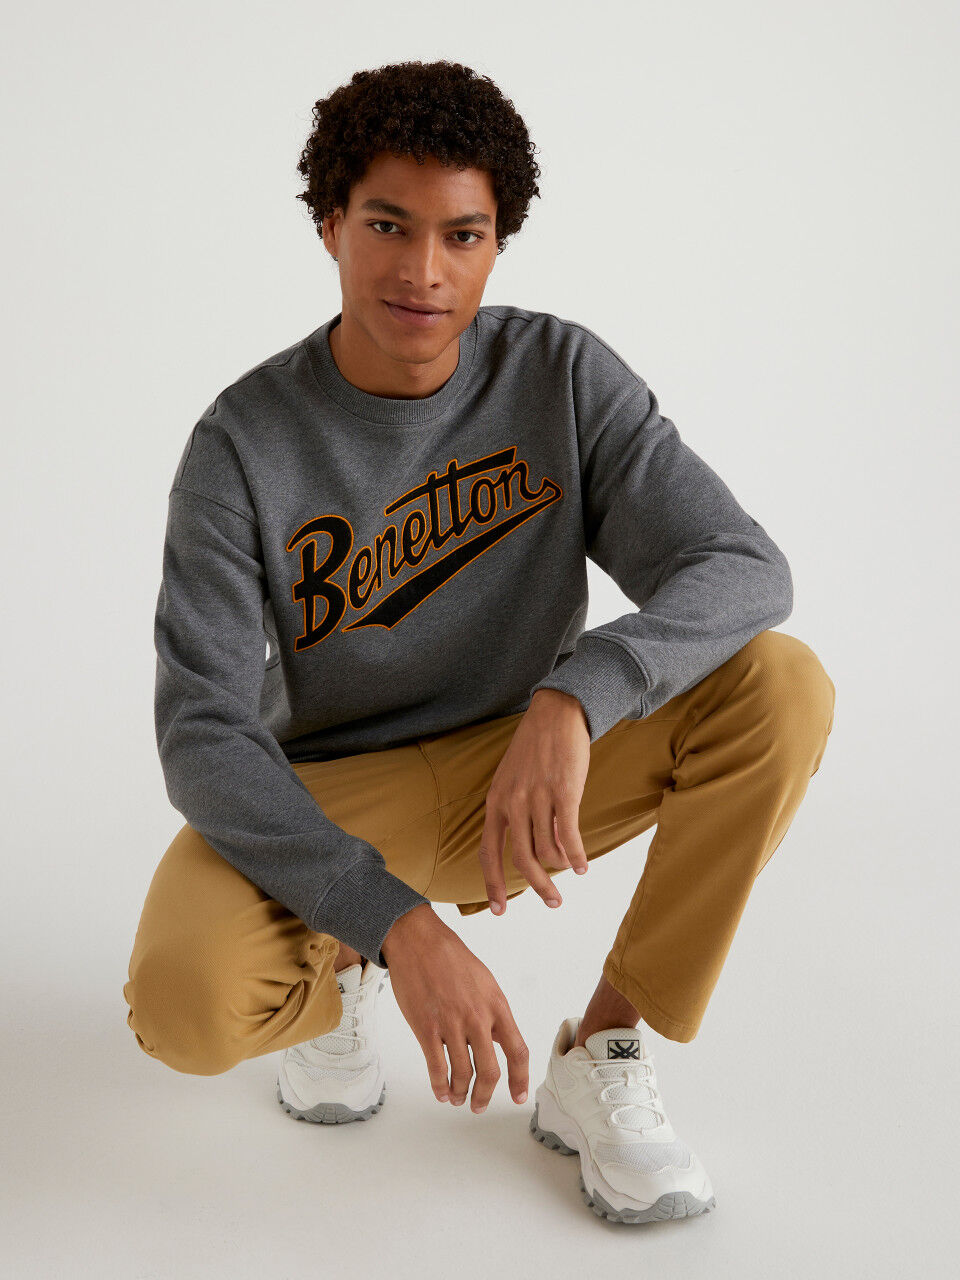 100% cotton college-style sweatshirt